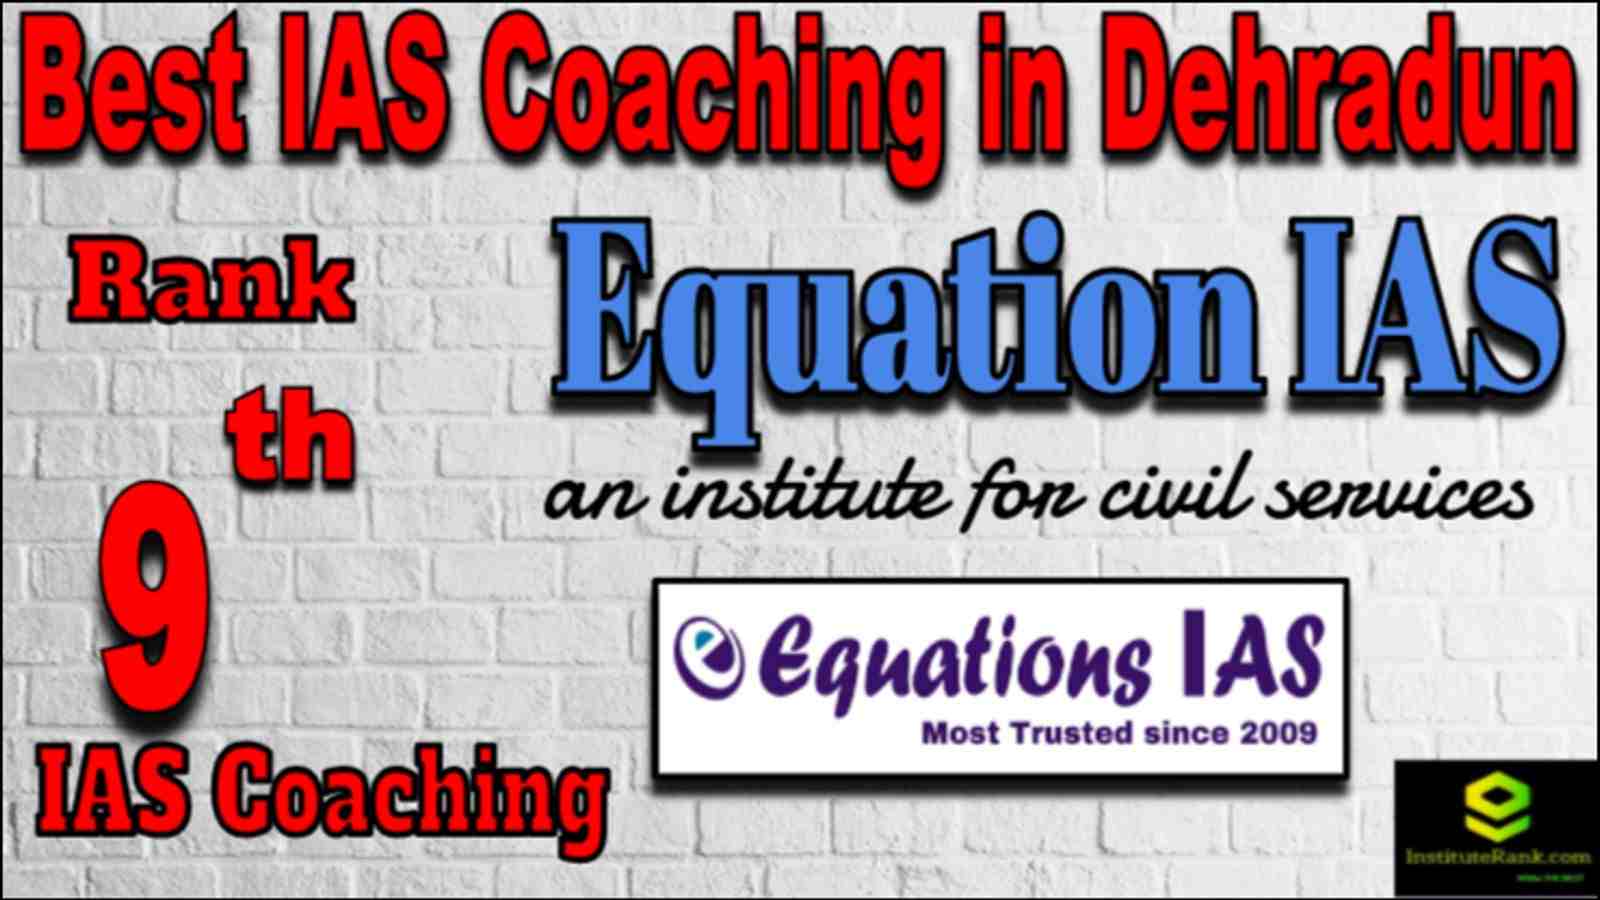 Rank 9 Best IAS Coaching in Dehradun